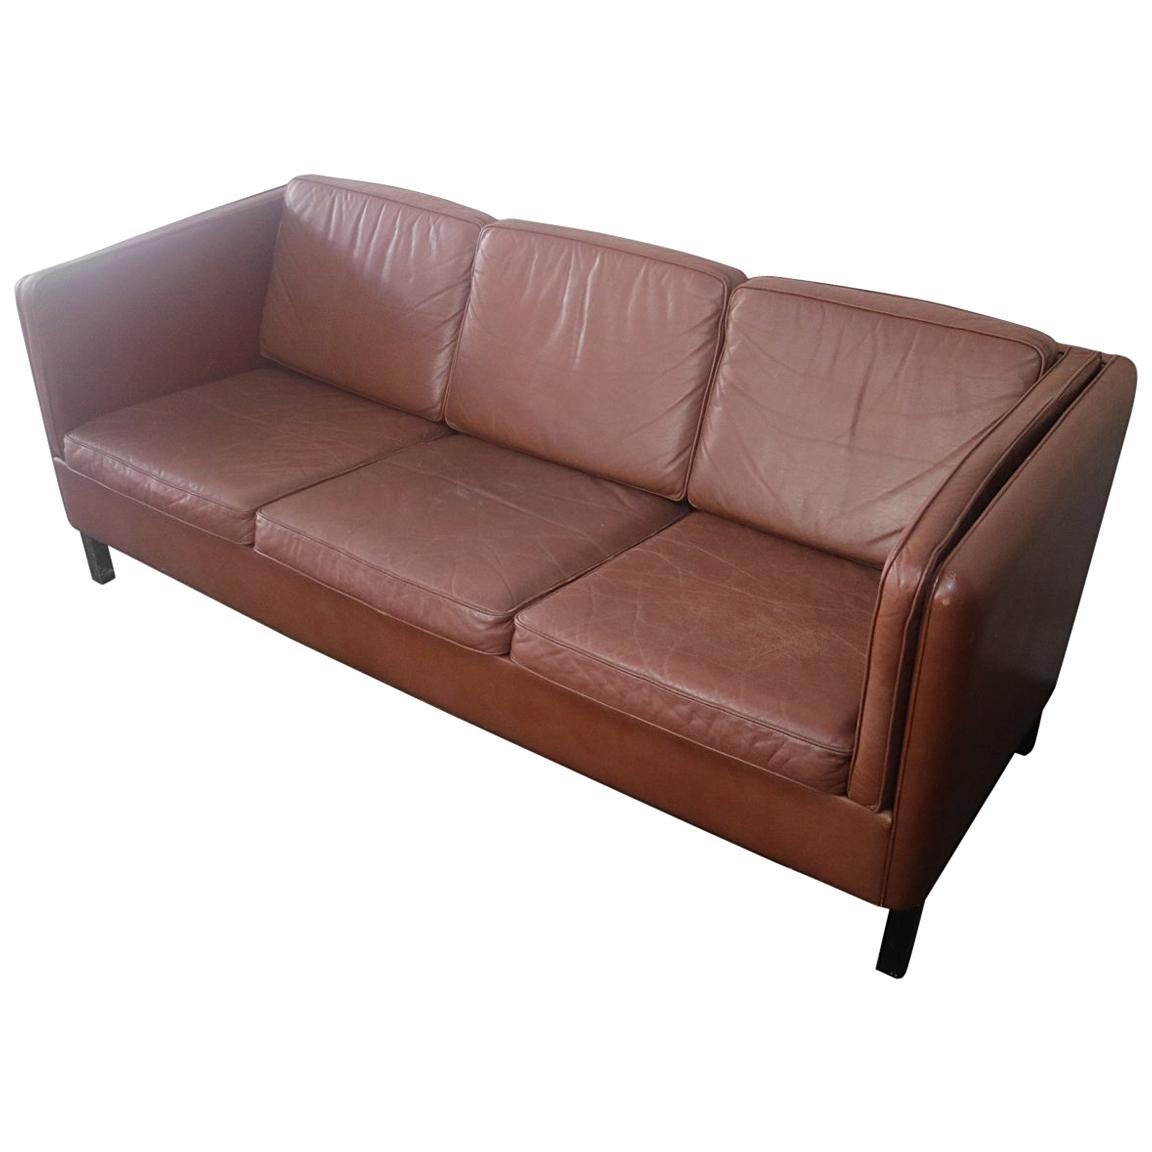 1970s Danish Midcentury Leather Three-Seat Sofa For Sale